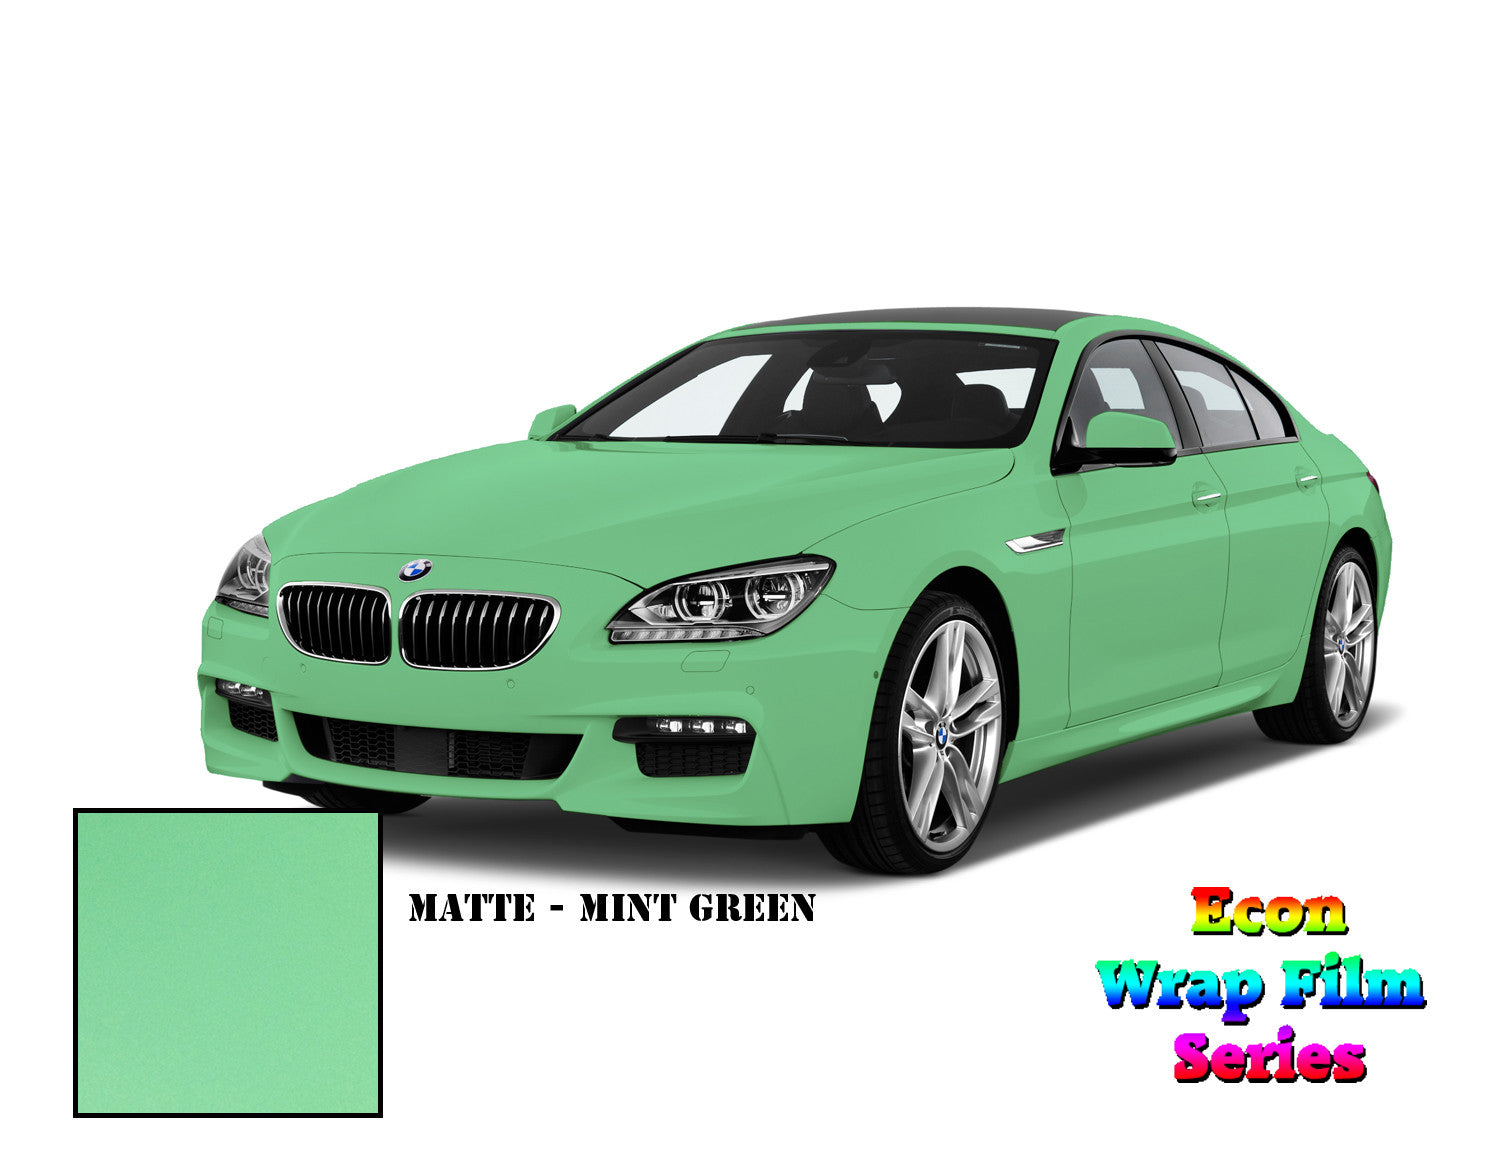 Econ Wrap Film Series - Matte Mint Green - Hachi Auto